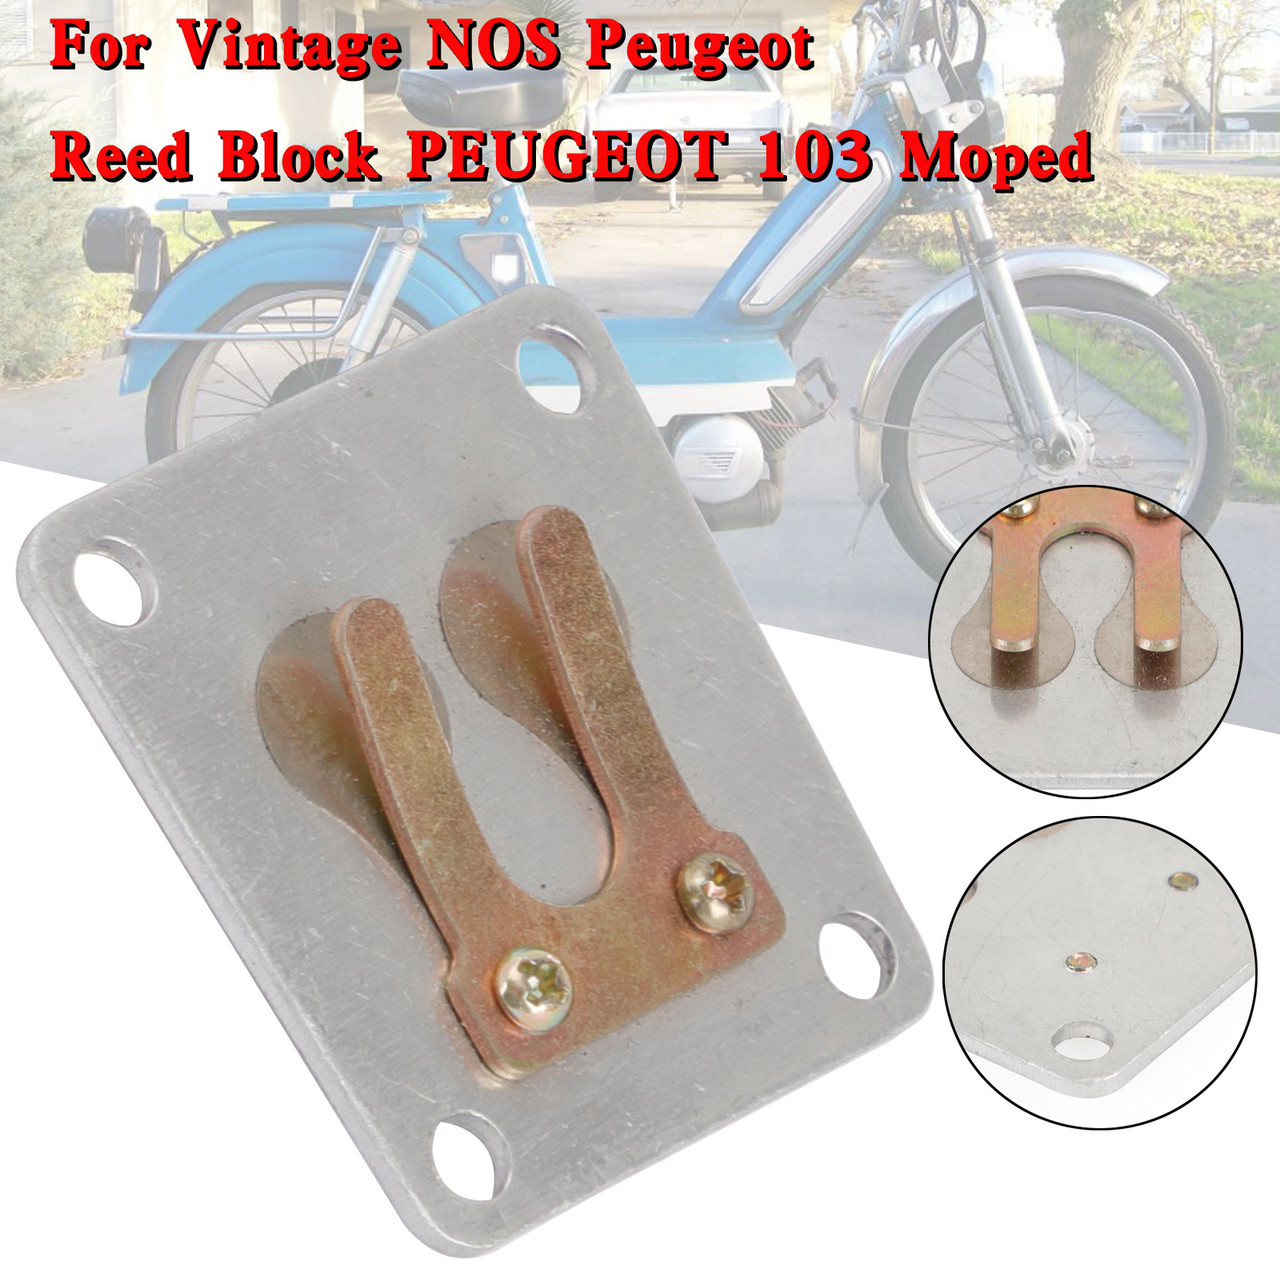 Vintage NOS Peugeot Reed Block Reed Valve  For PEUGEOT 103-SP MOPED 47229